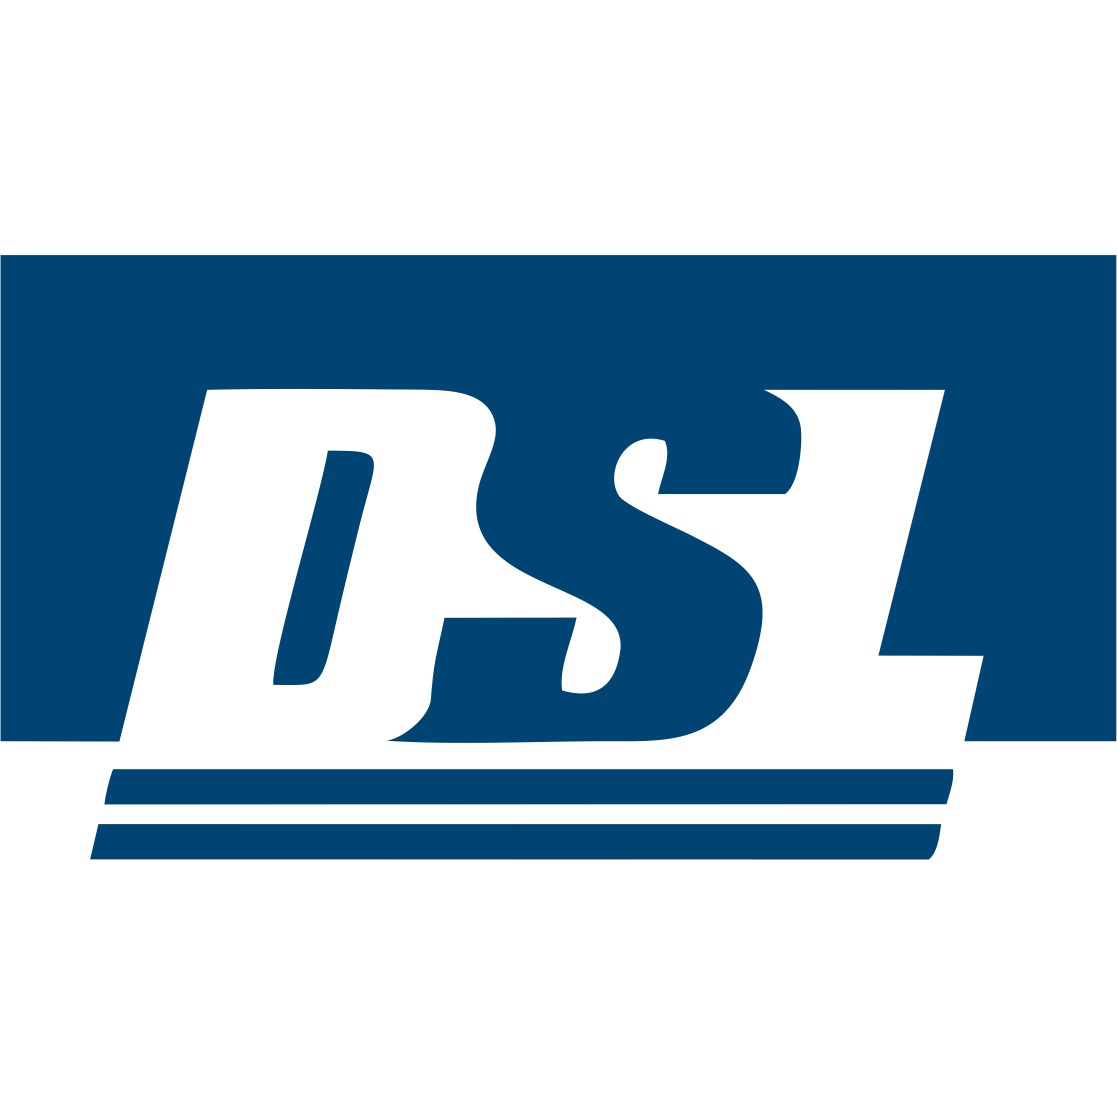 DSL